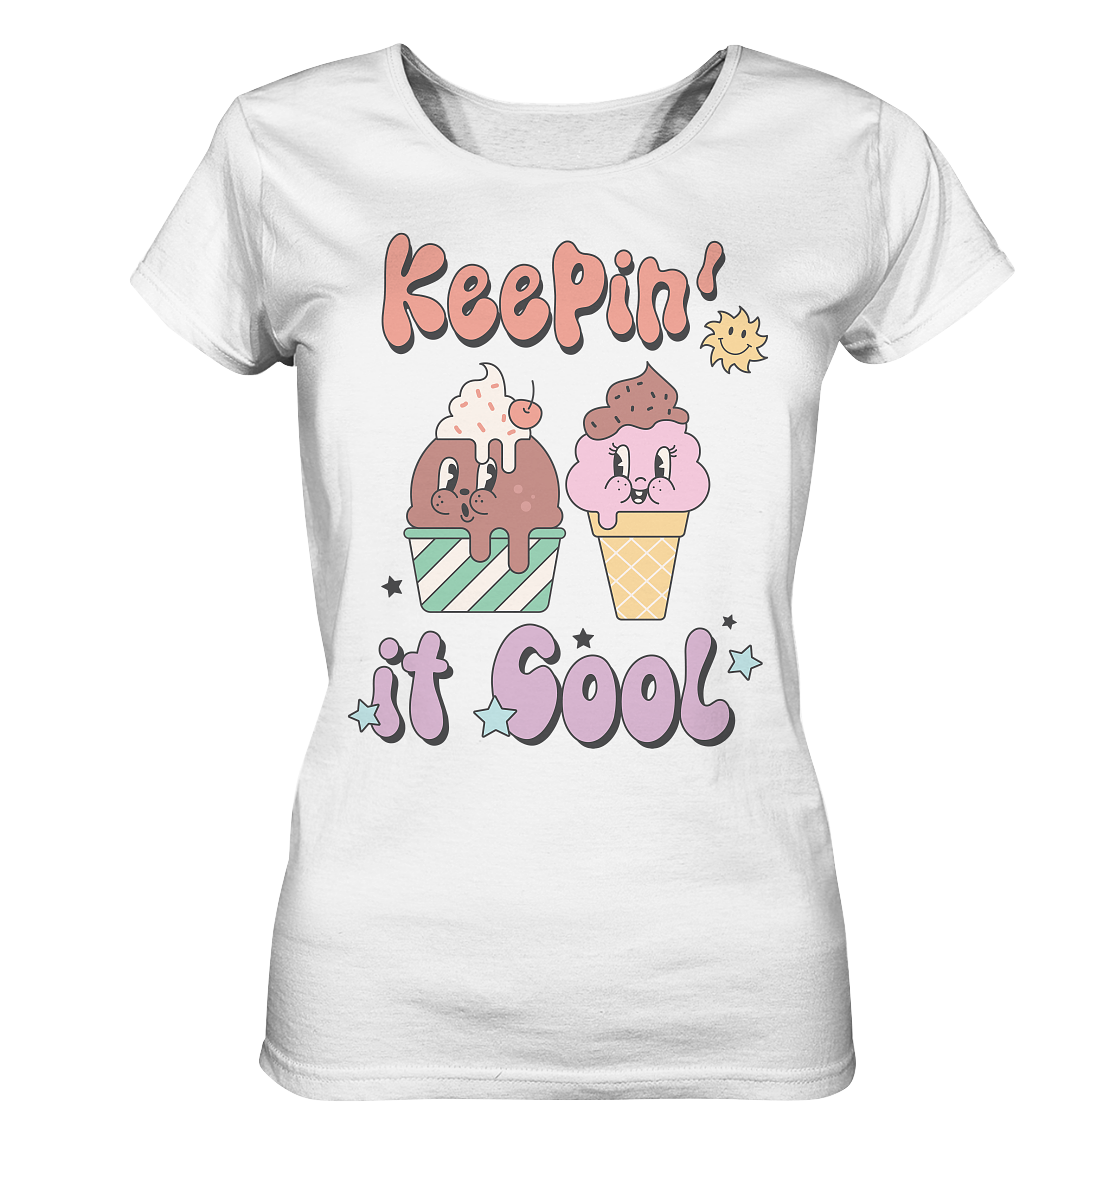 Retro Summer - Keepin it cool - Ladies Organic Shirt